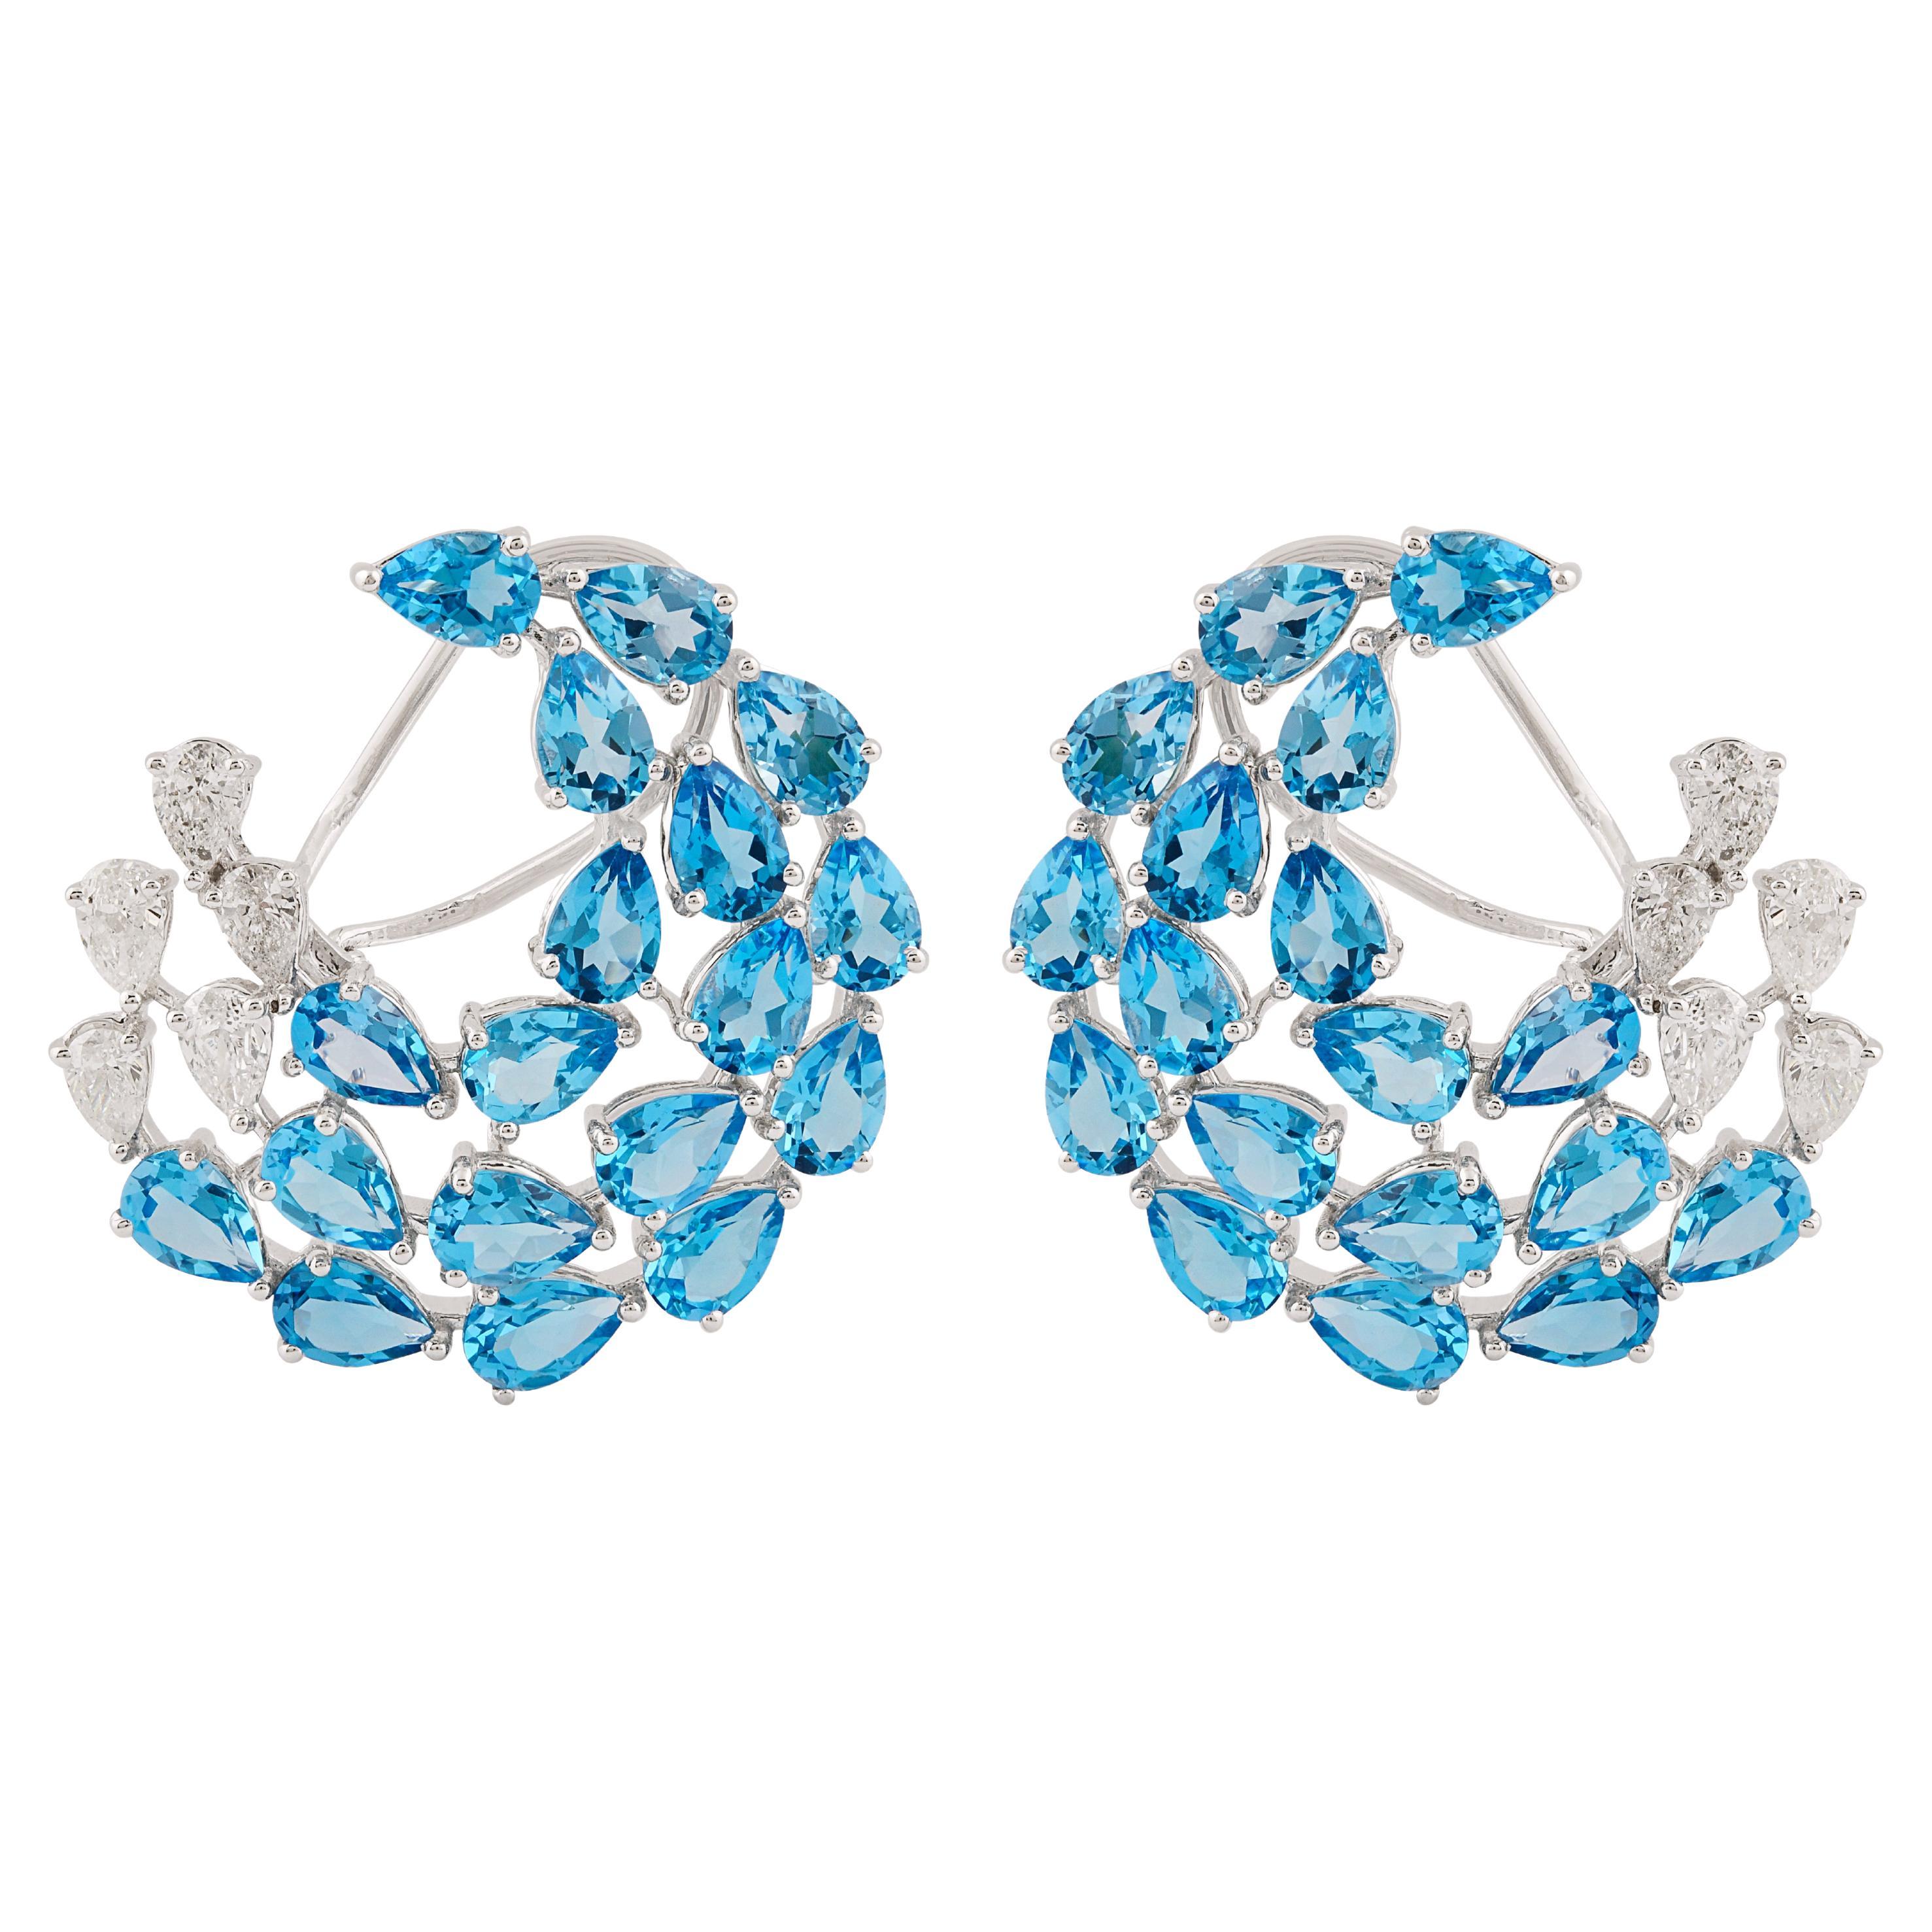 Real Blue Topaz Gemstone Crescent Moon Earrings 14k White Gold Diamond Jewelry